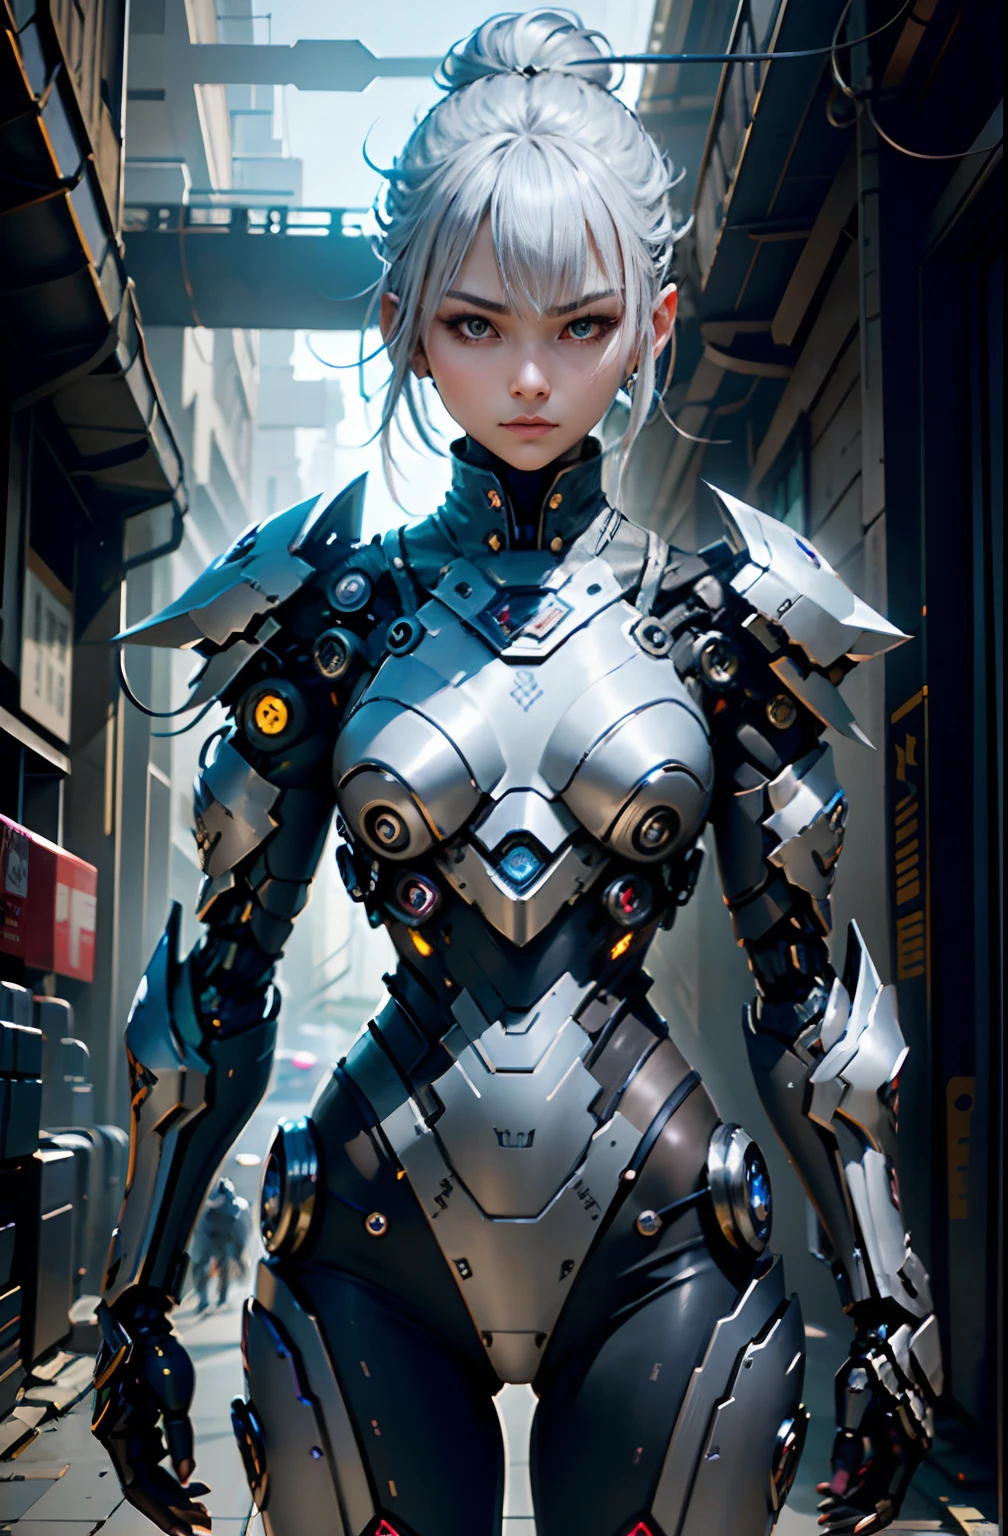 Fantasy、Silver hair color、Ultra short hairstyle、cyberpunked、(Double Sword、Scorpion Cyborg Woman、Das Veilchen:1.1)、1 woman、Mechanical technology、Robot Presence、Ninja-like fighting stance、Cybernetic Guardian、